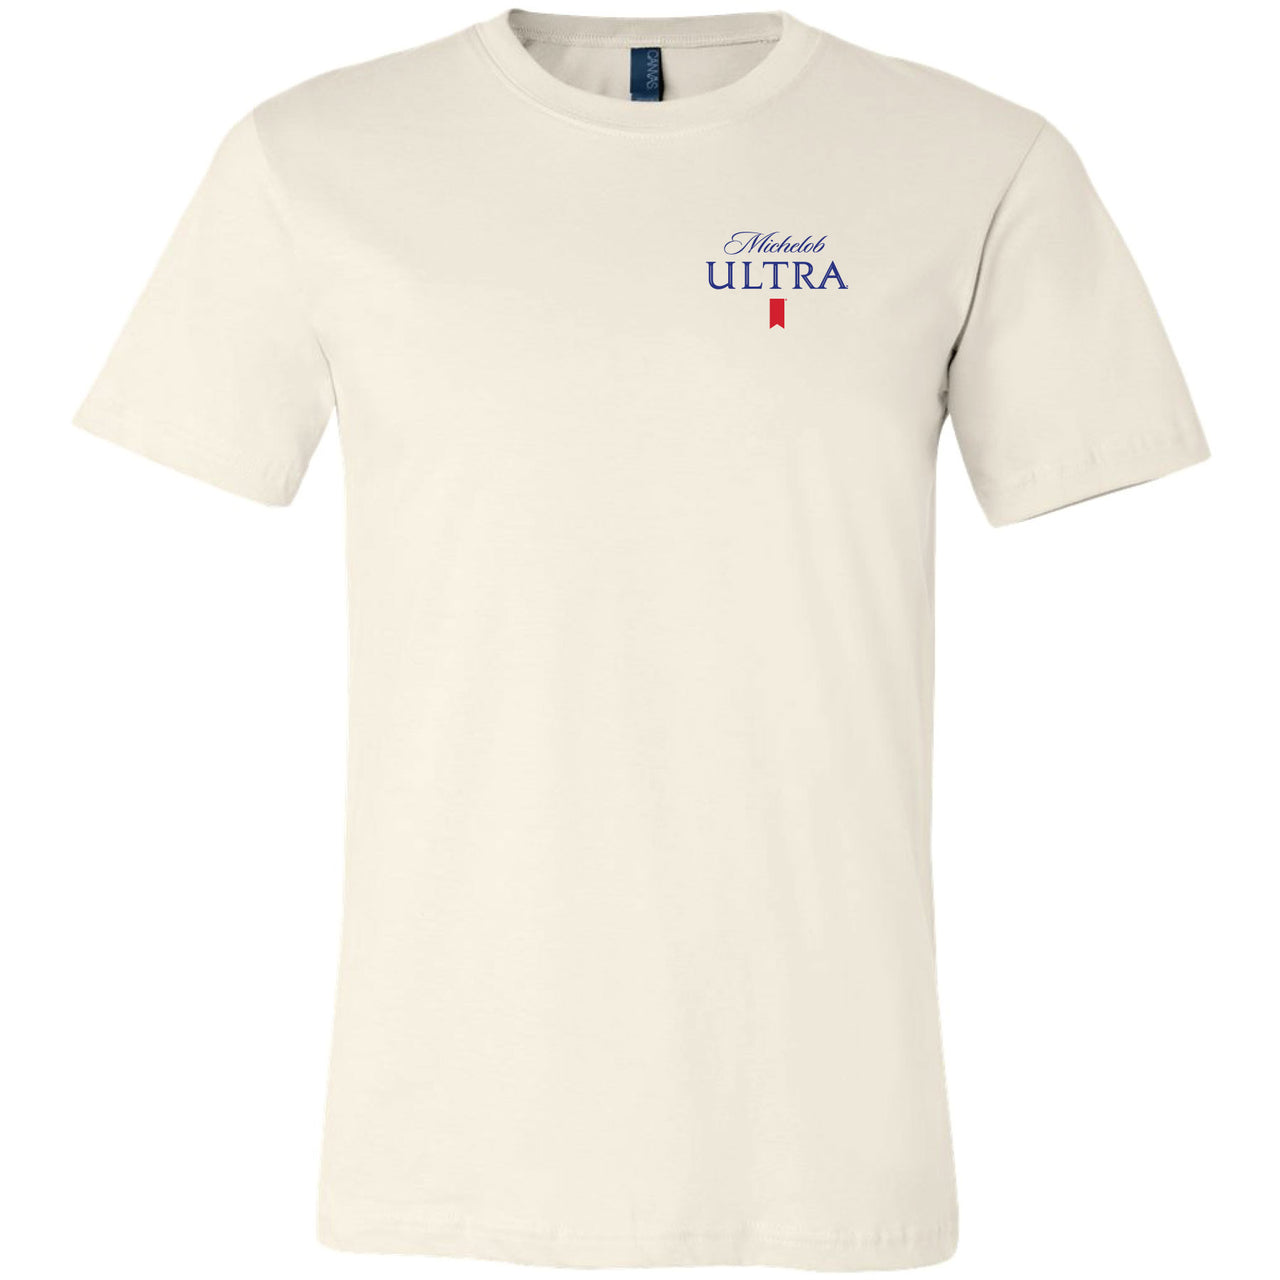 Michelob Ultra - 2-sided Golf Shirt